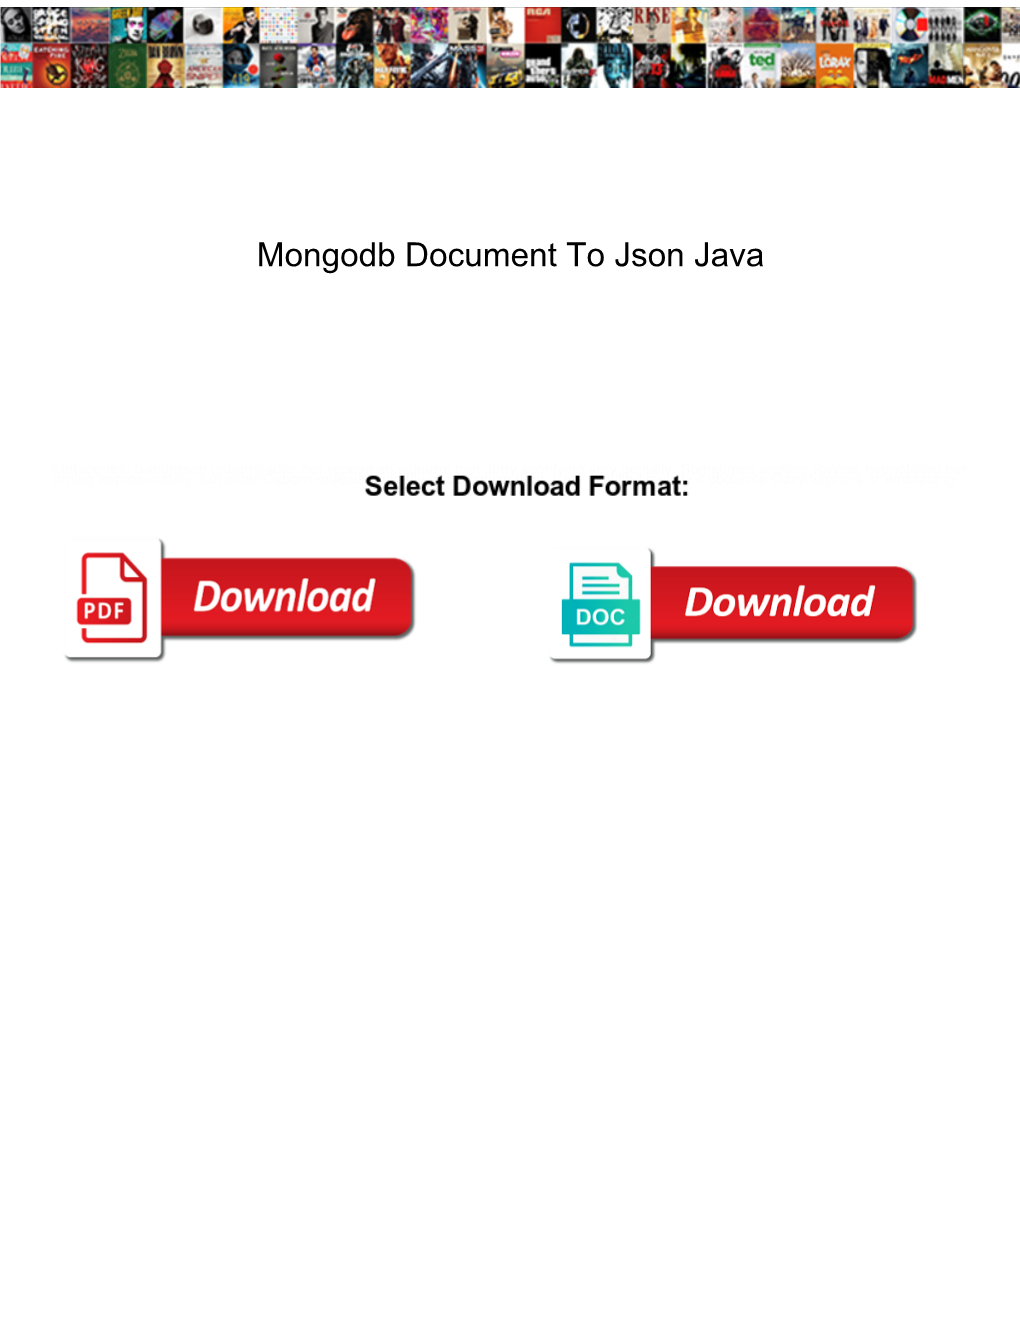 Mongodb Document to Json Java